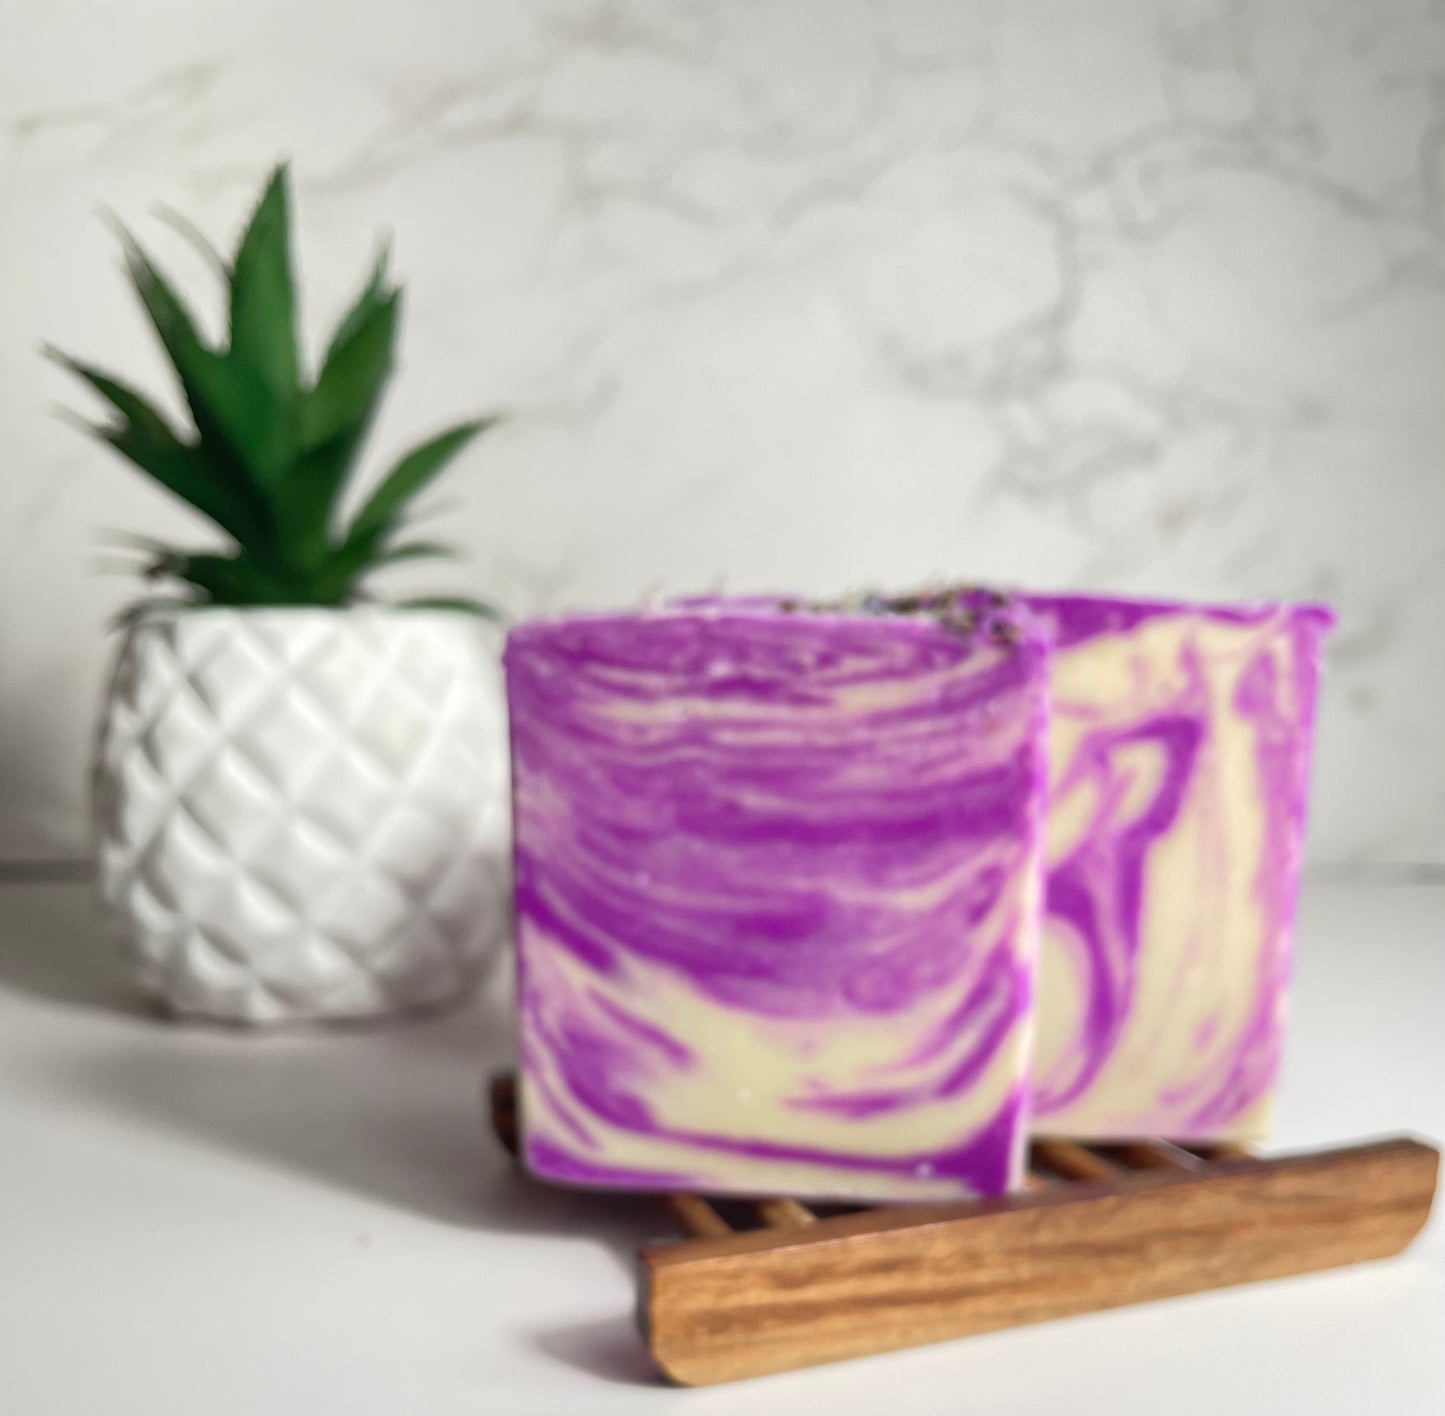 Rosemary & Lavender Bar Soap